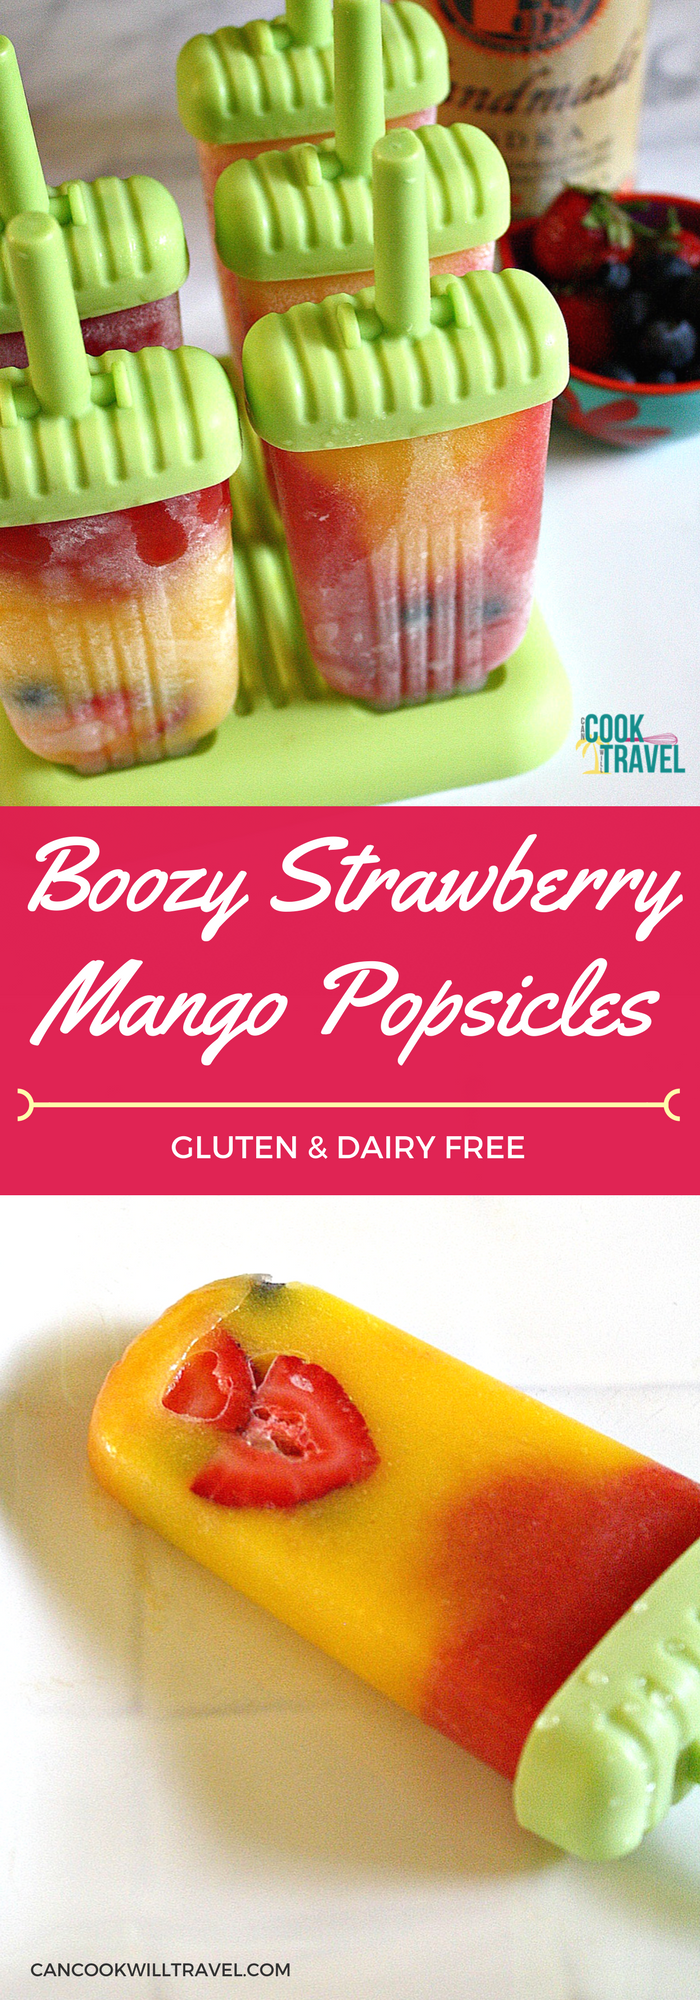 Boozy Strawberry Mango Popsicles_Collage1